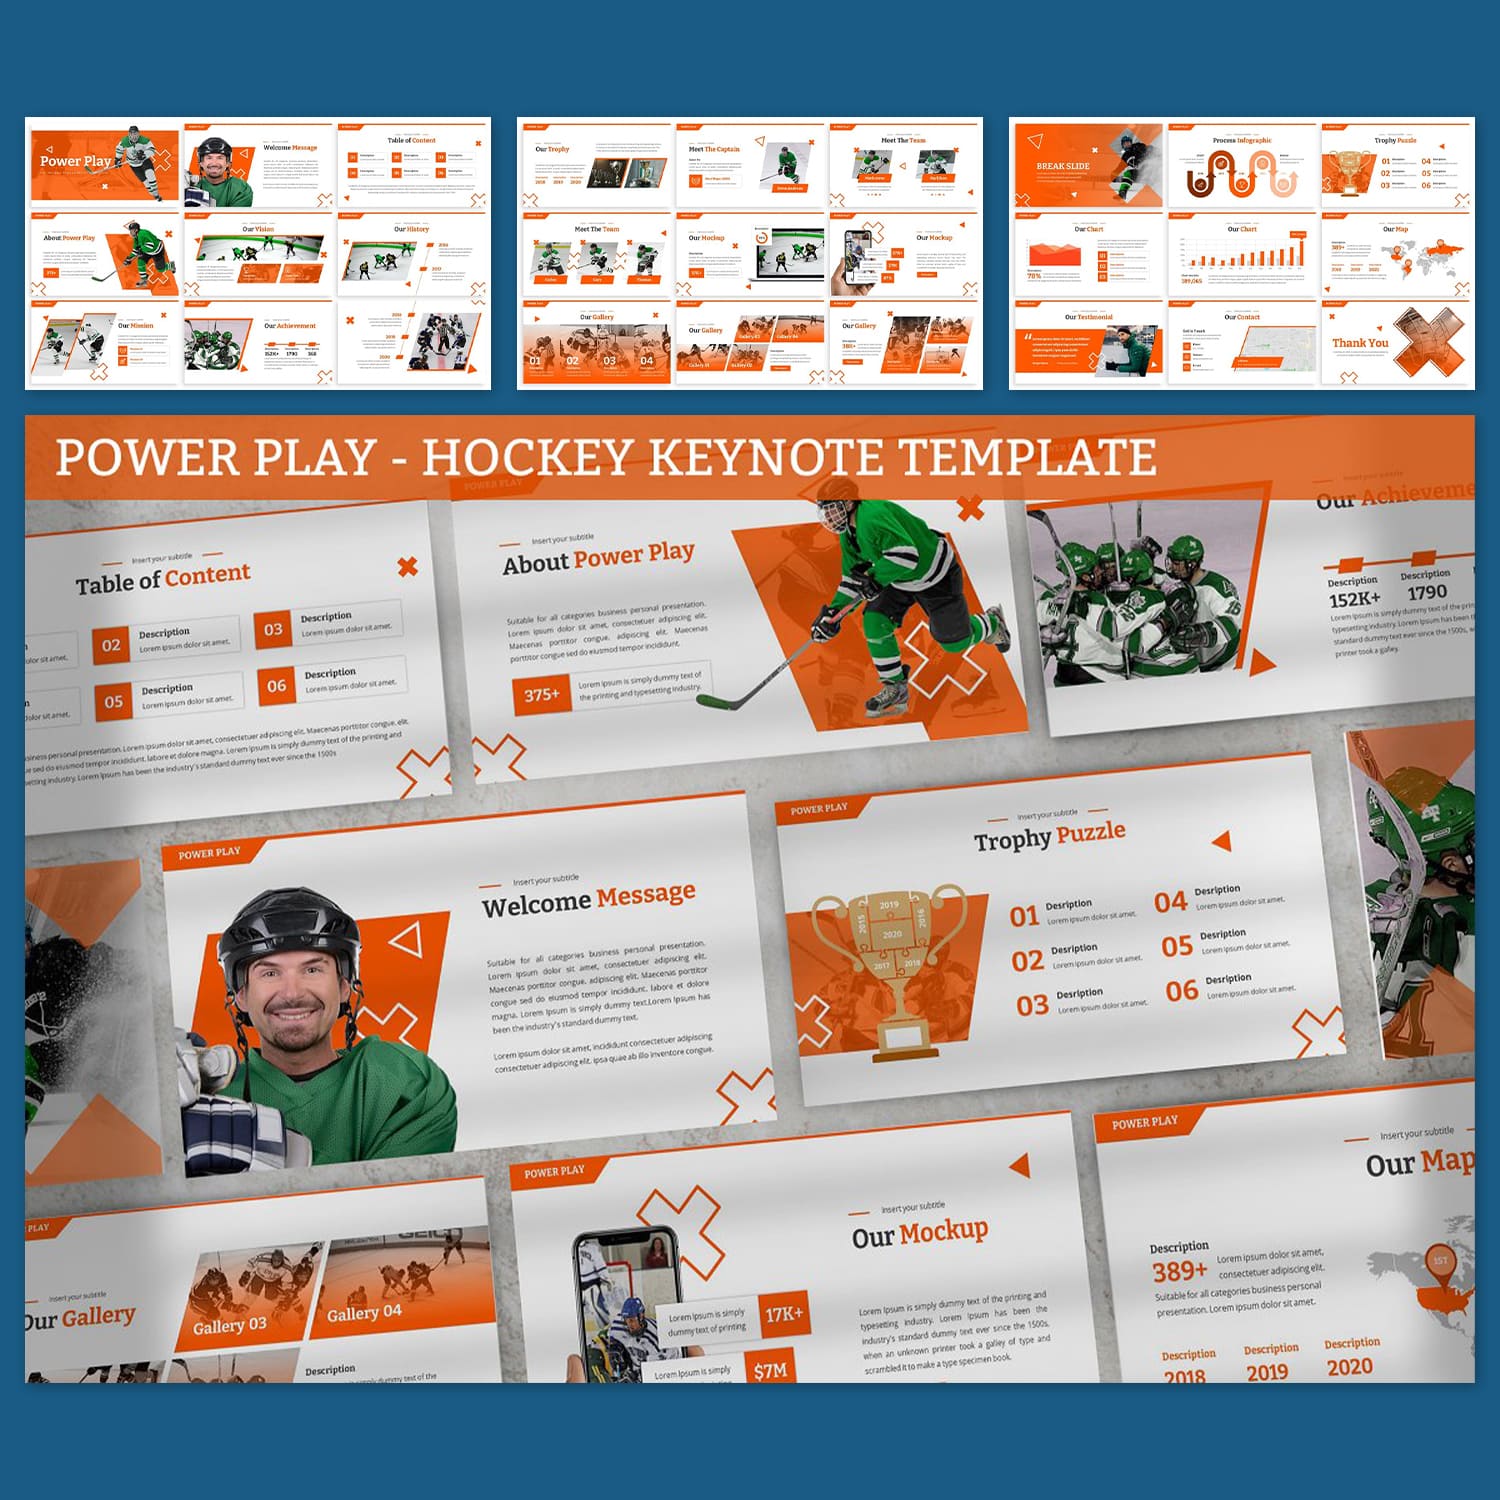 Power Play - Hockey Keynote Template main cover.